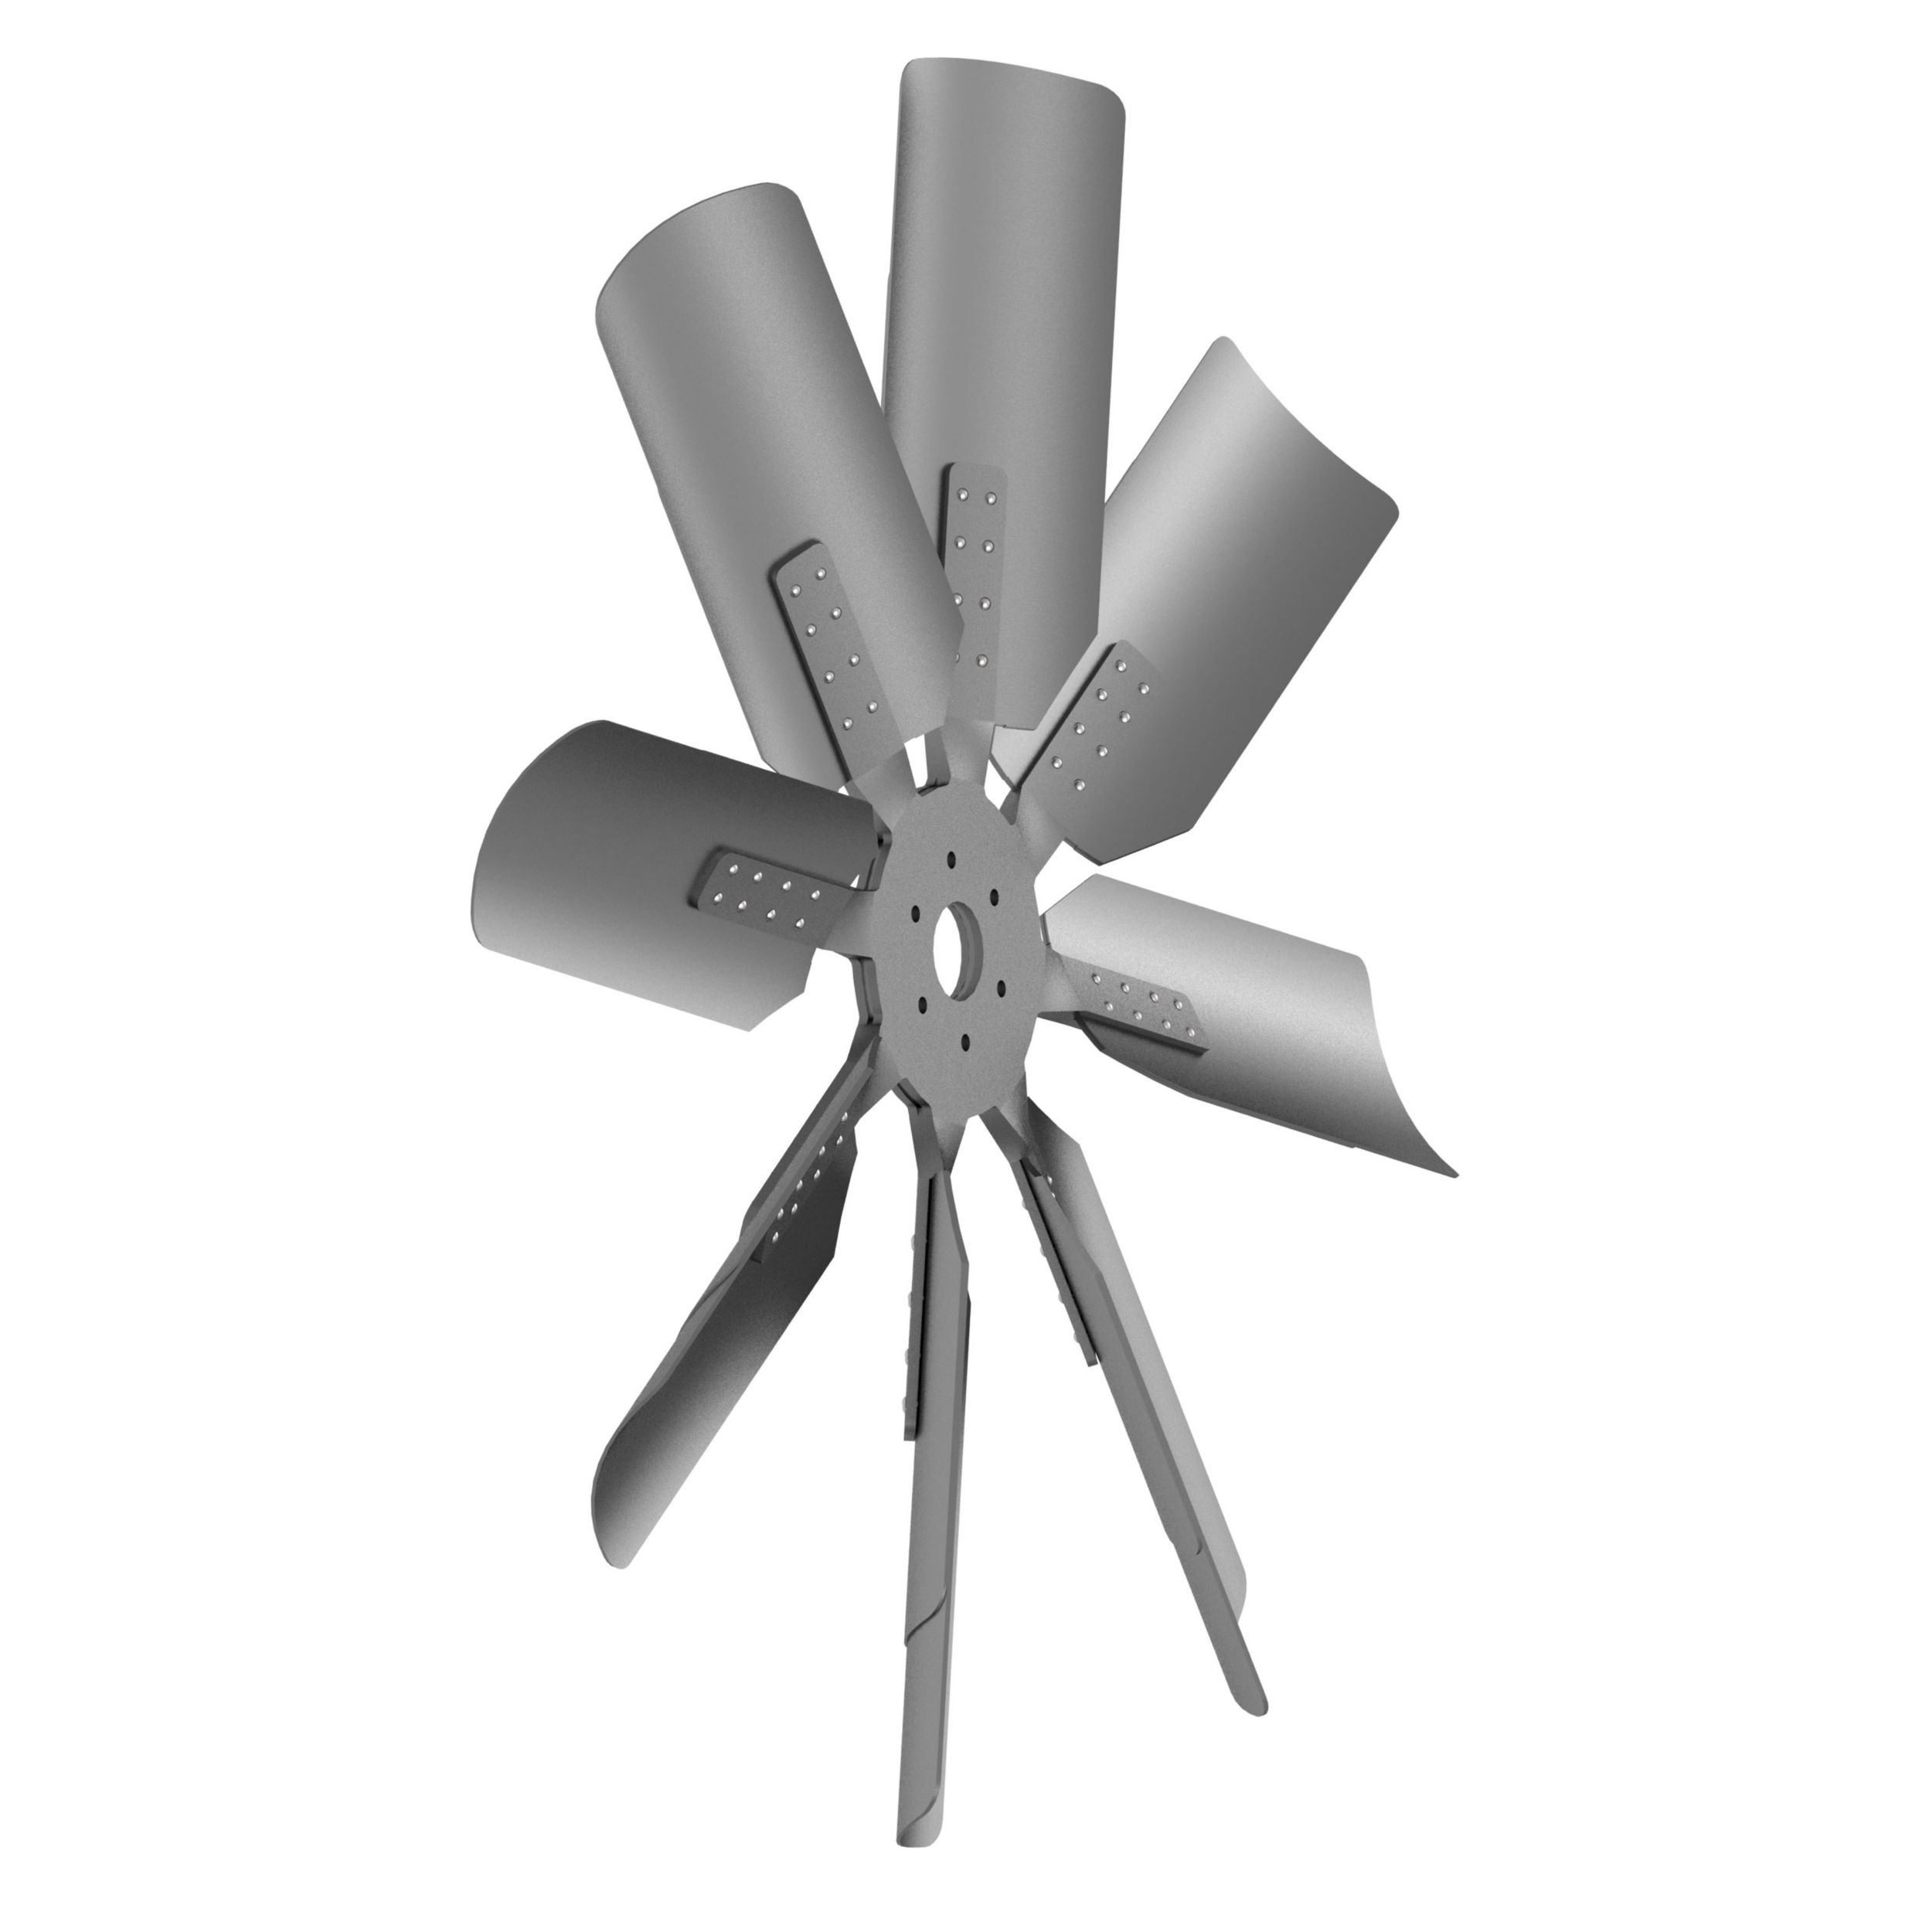 7N-4806: 风扇十字轴组件